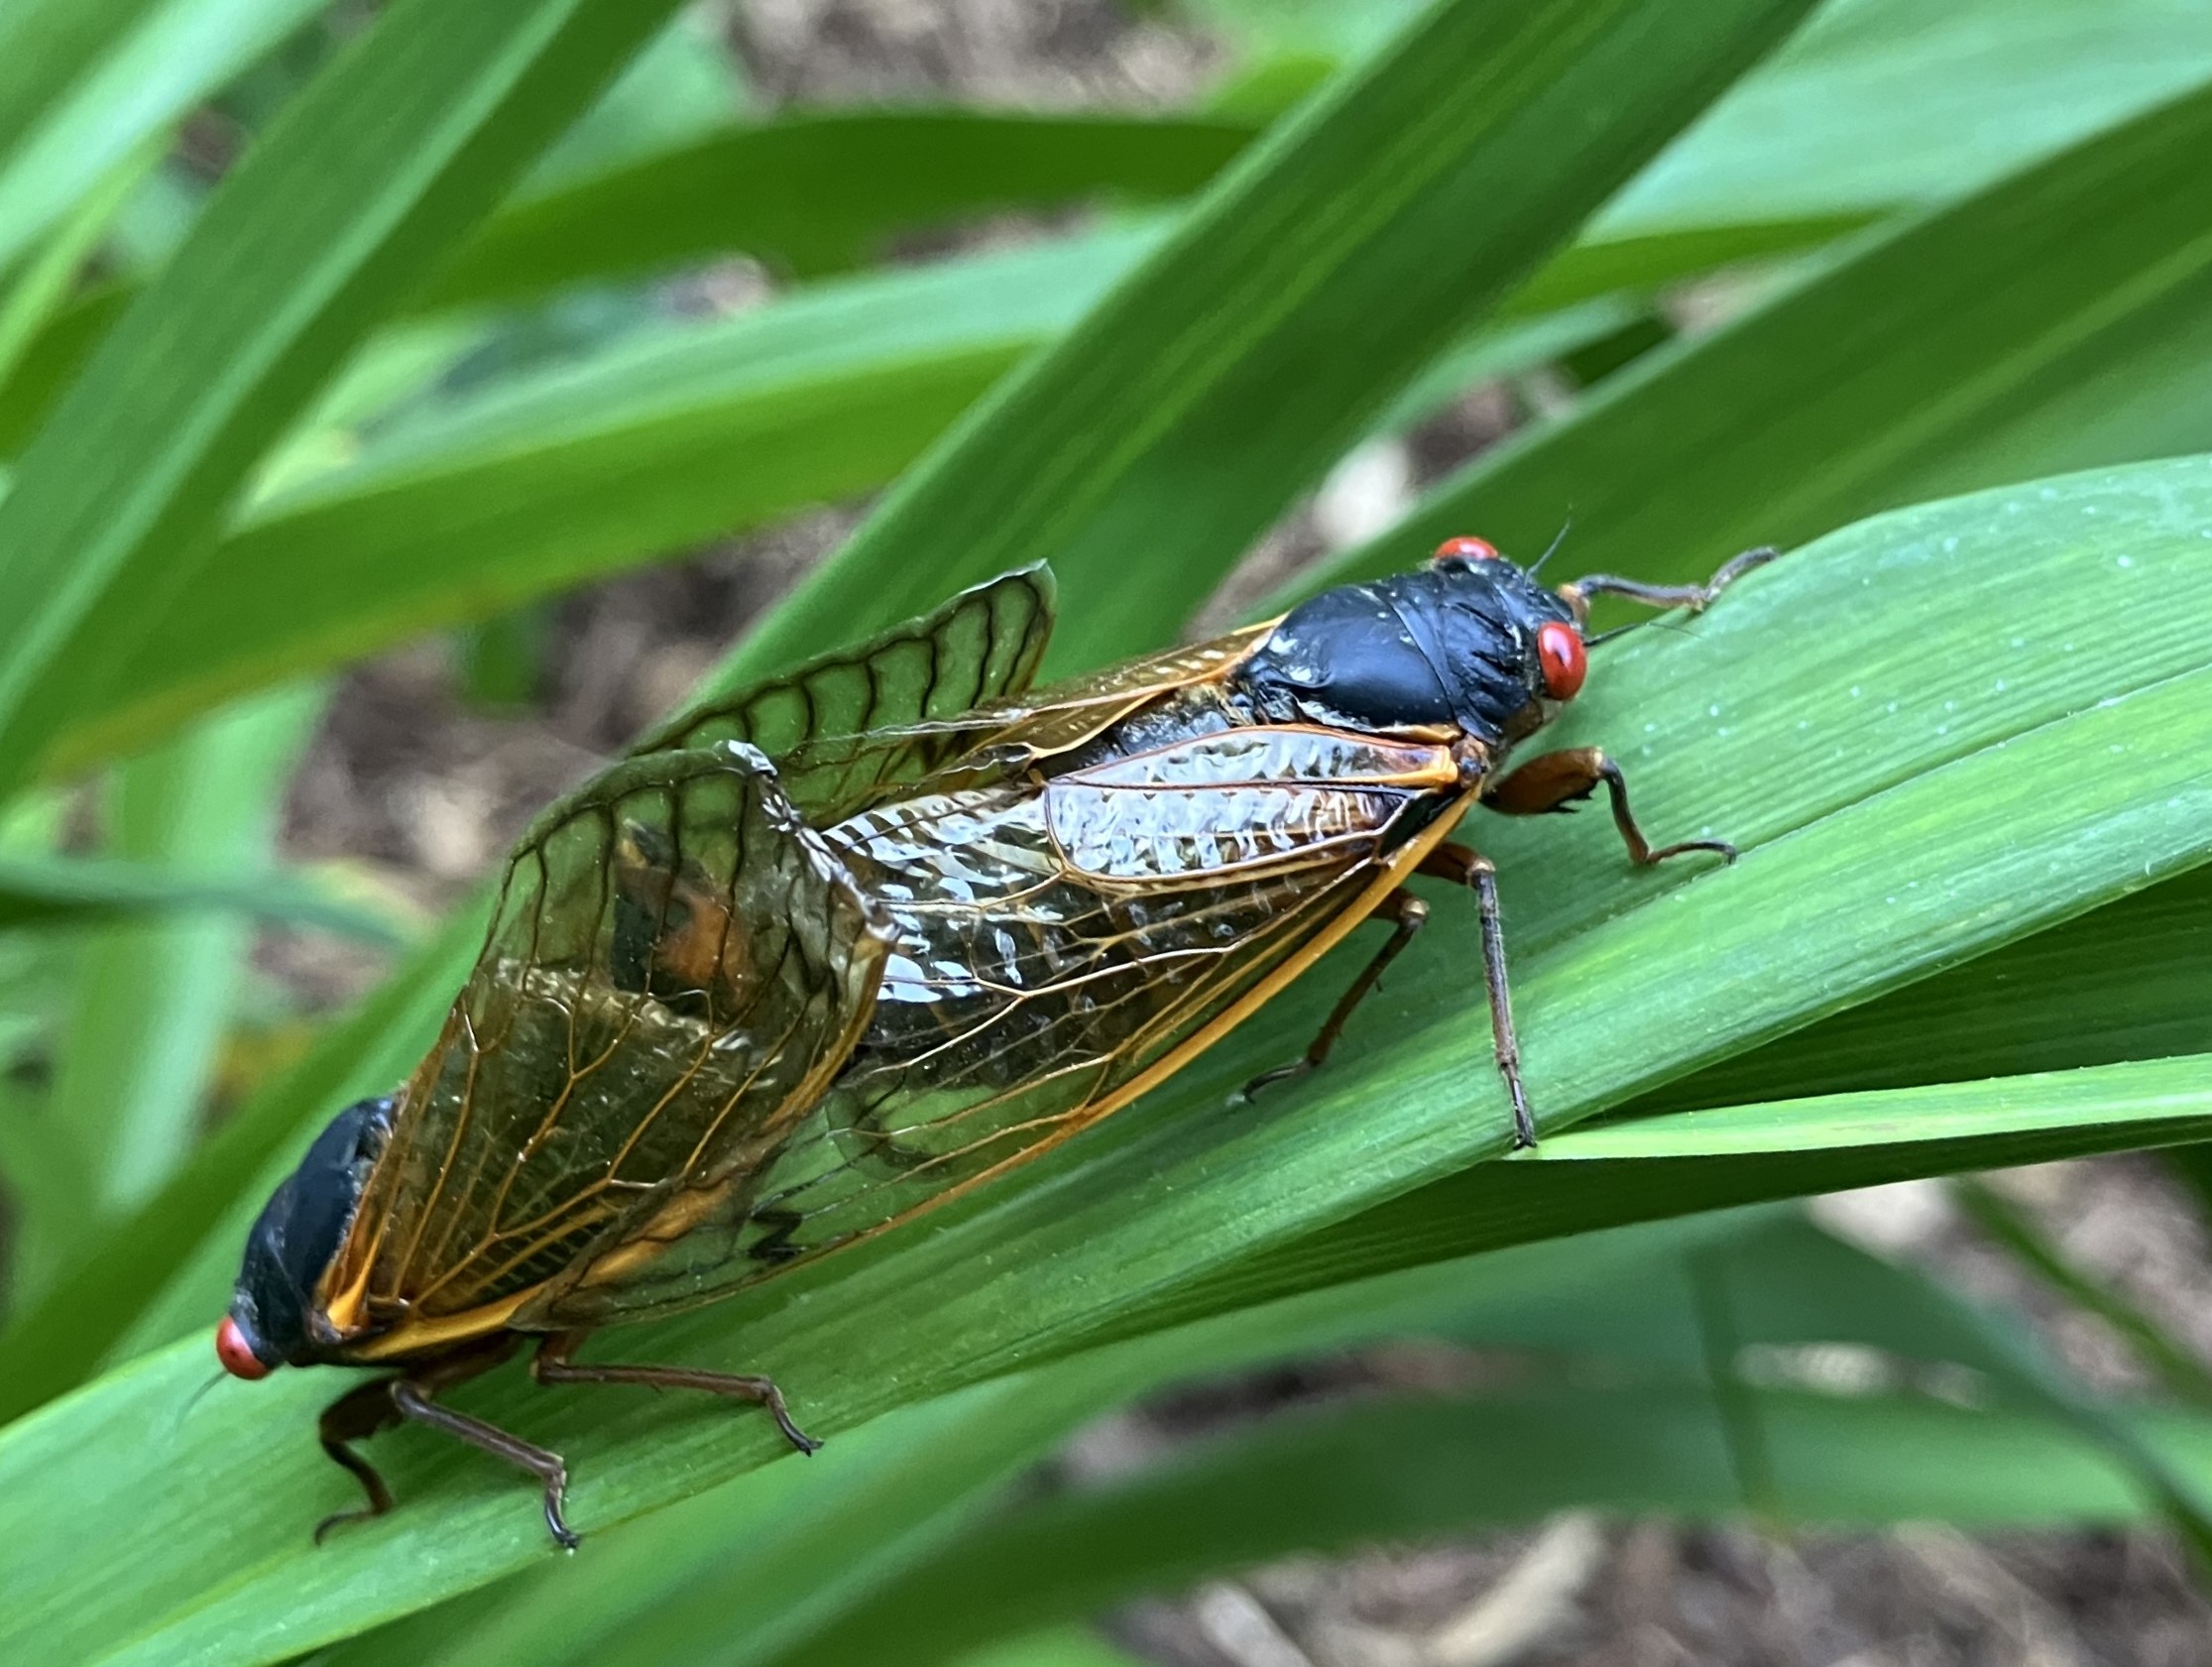 A pair of cicadas mating on a daylily leaf